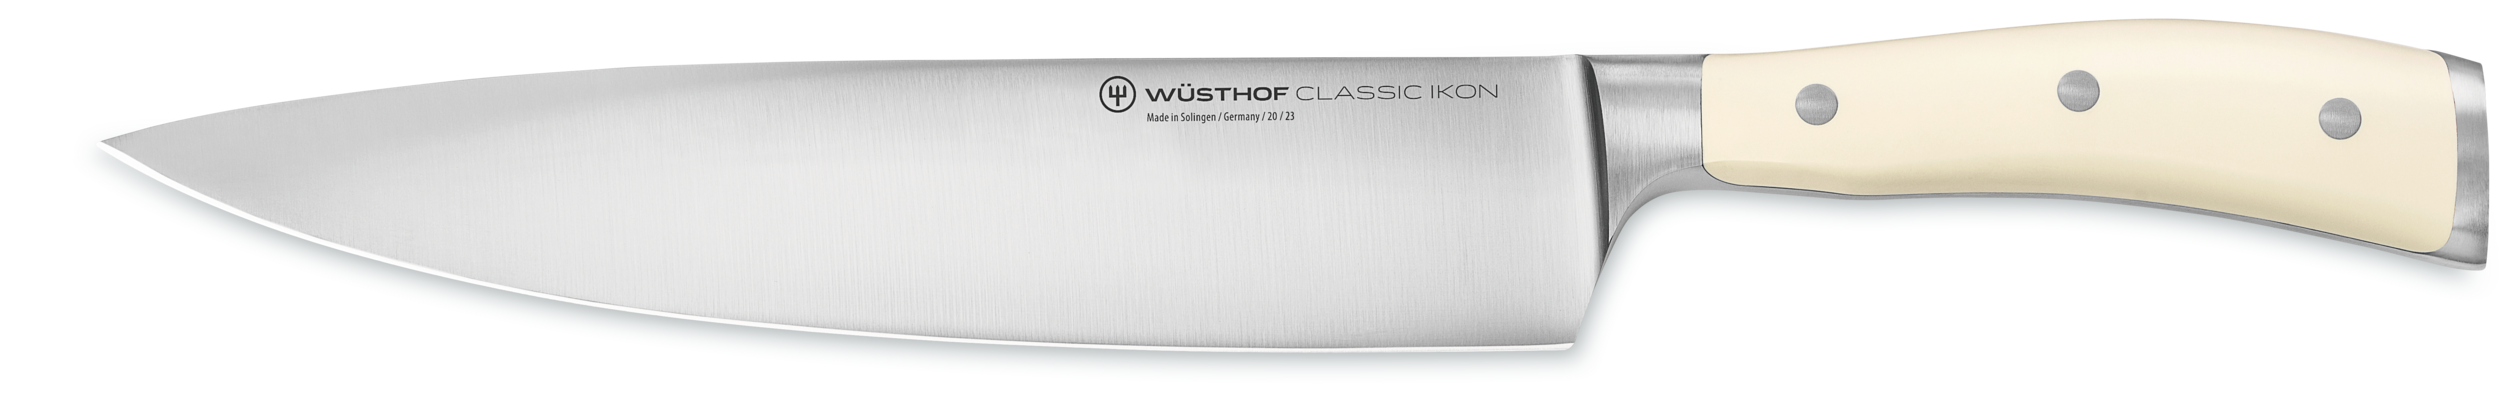 Wusthof Classic Ikon Creme Chef's Knife